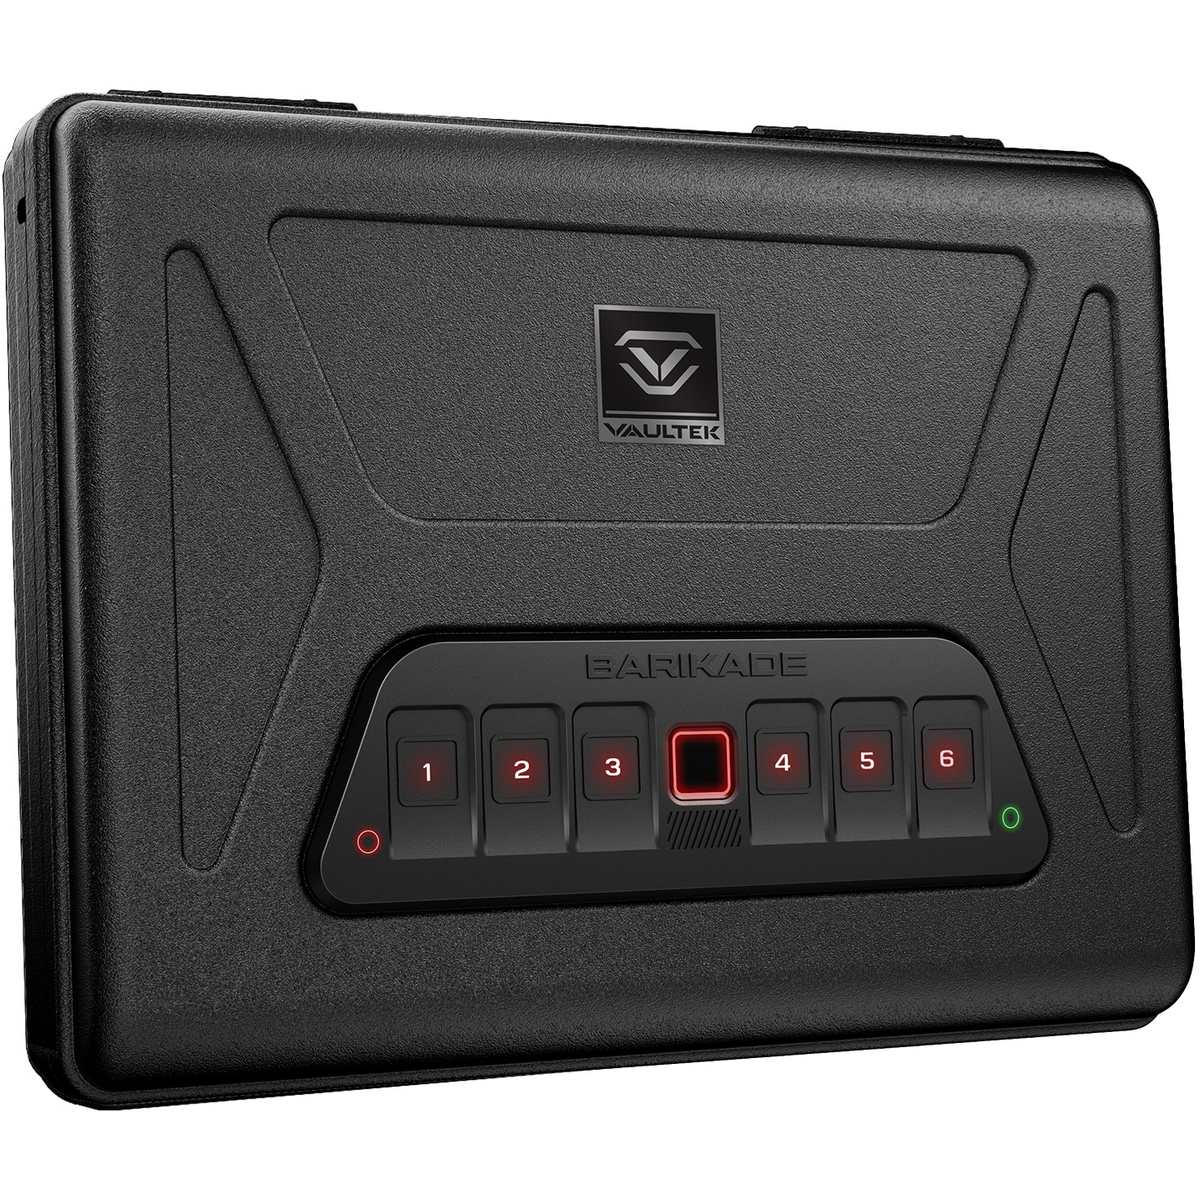 Vaultek - Barikade Series 2 Precision Built Safe with Biometric Scanner and Backlit Keypad